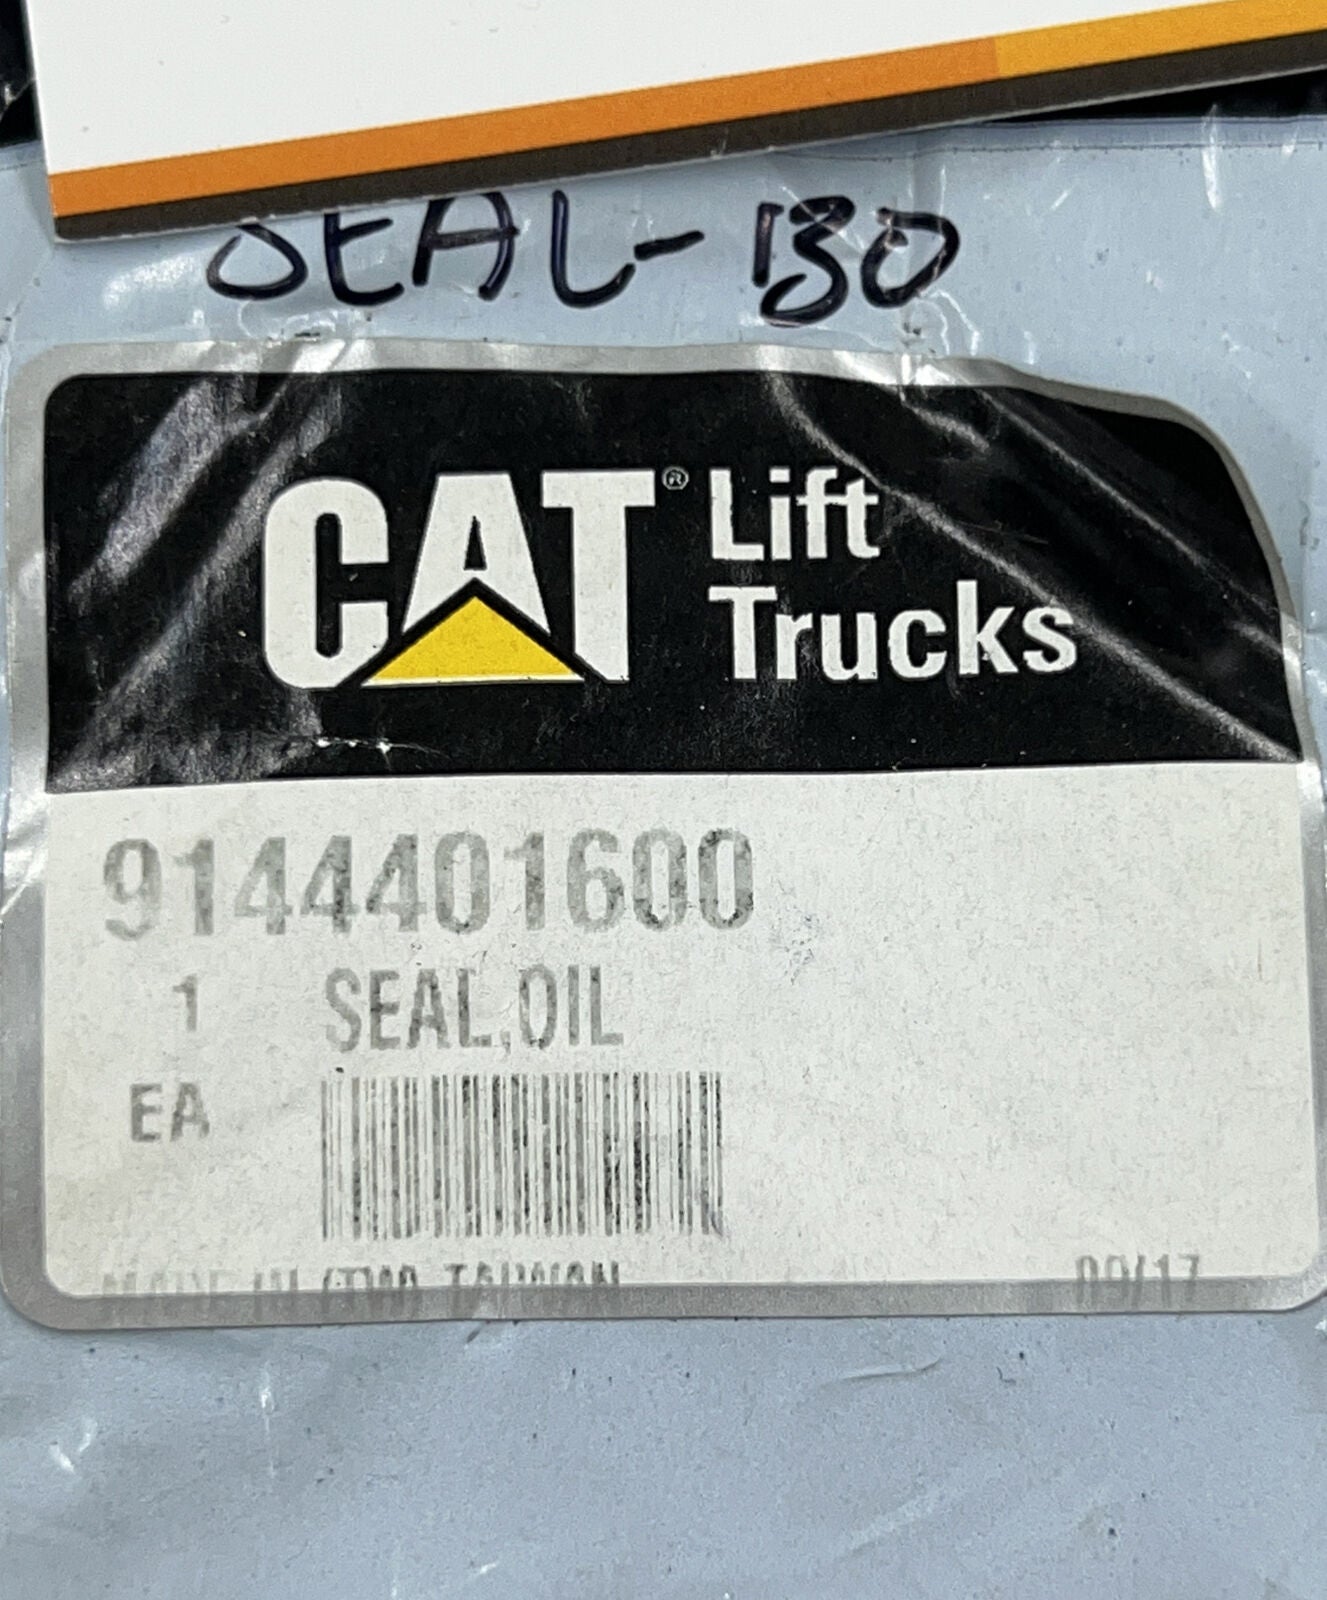 CAT Caterpillar Oil Seal 9144401600 (YE128)